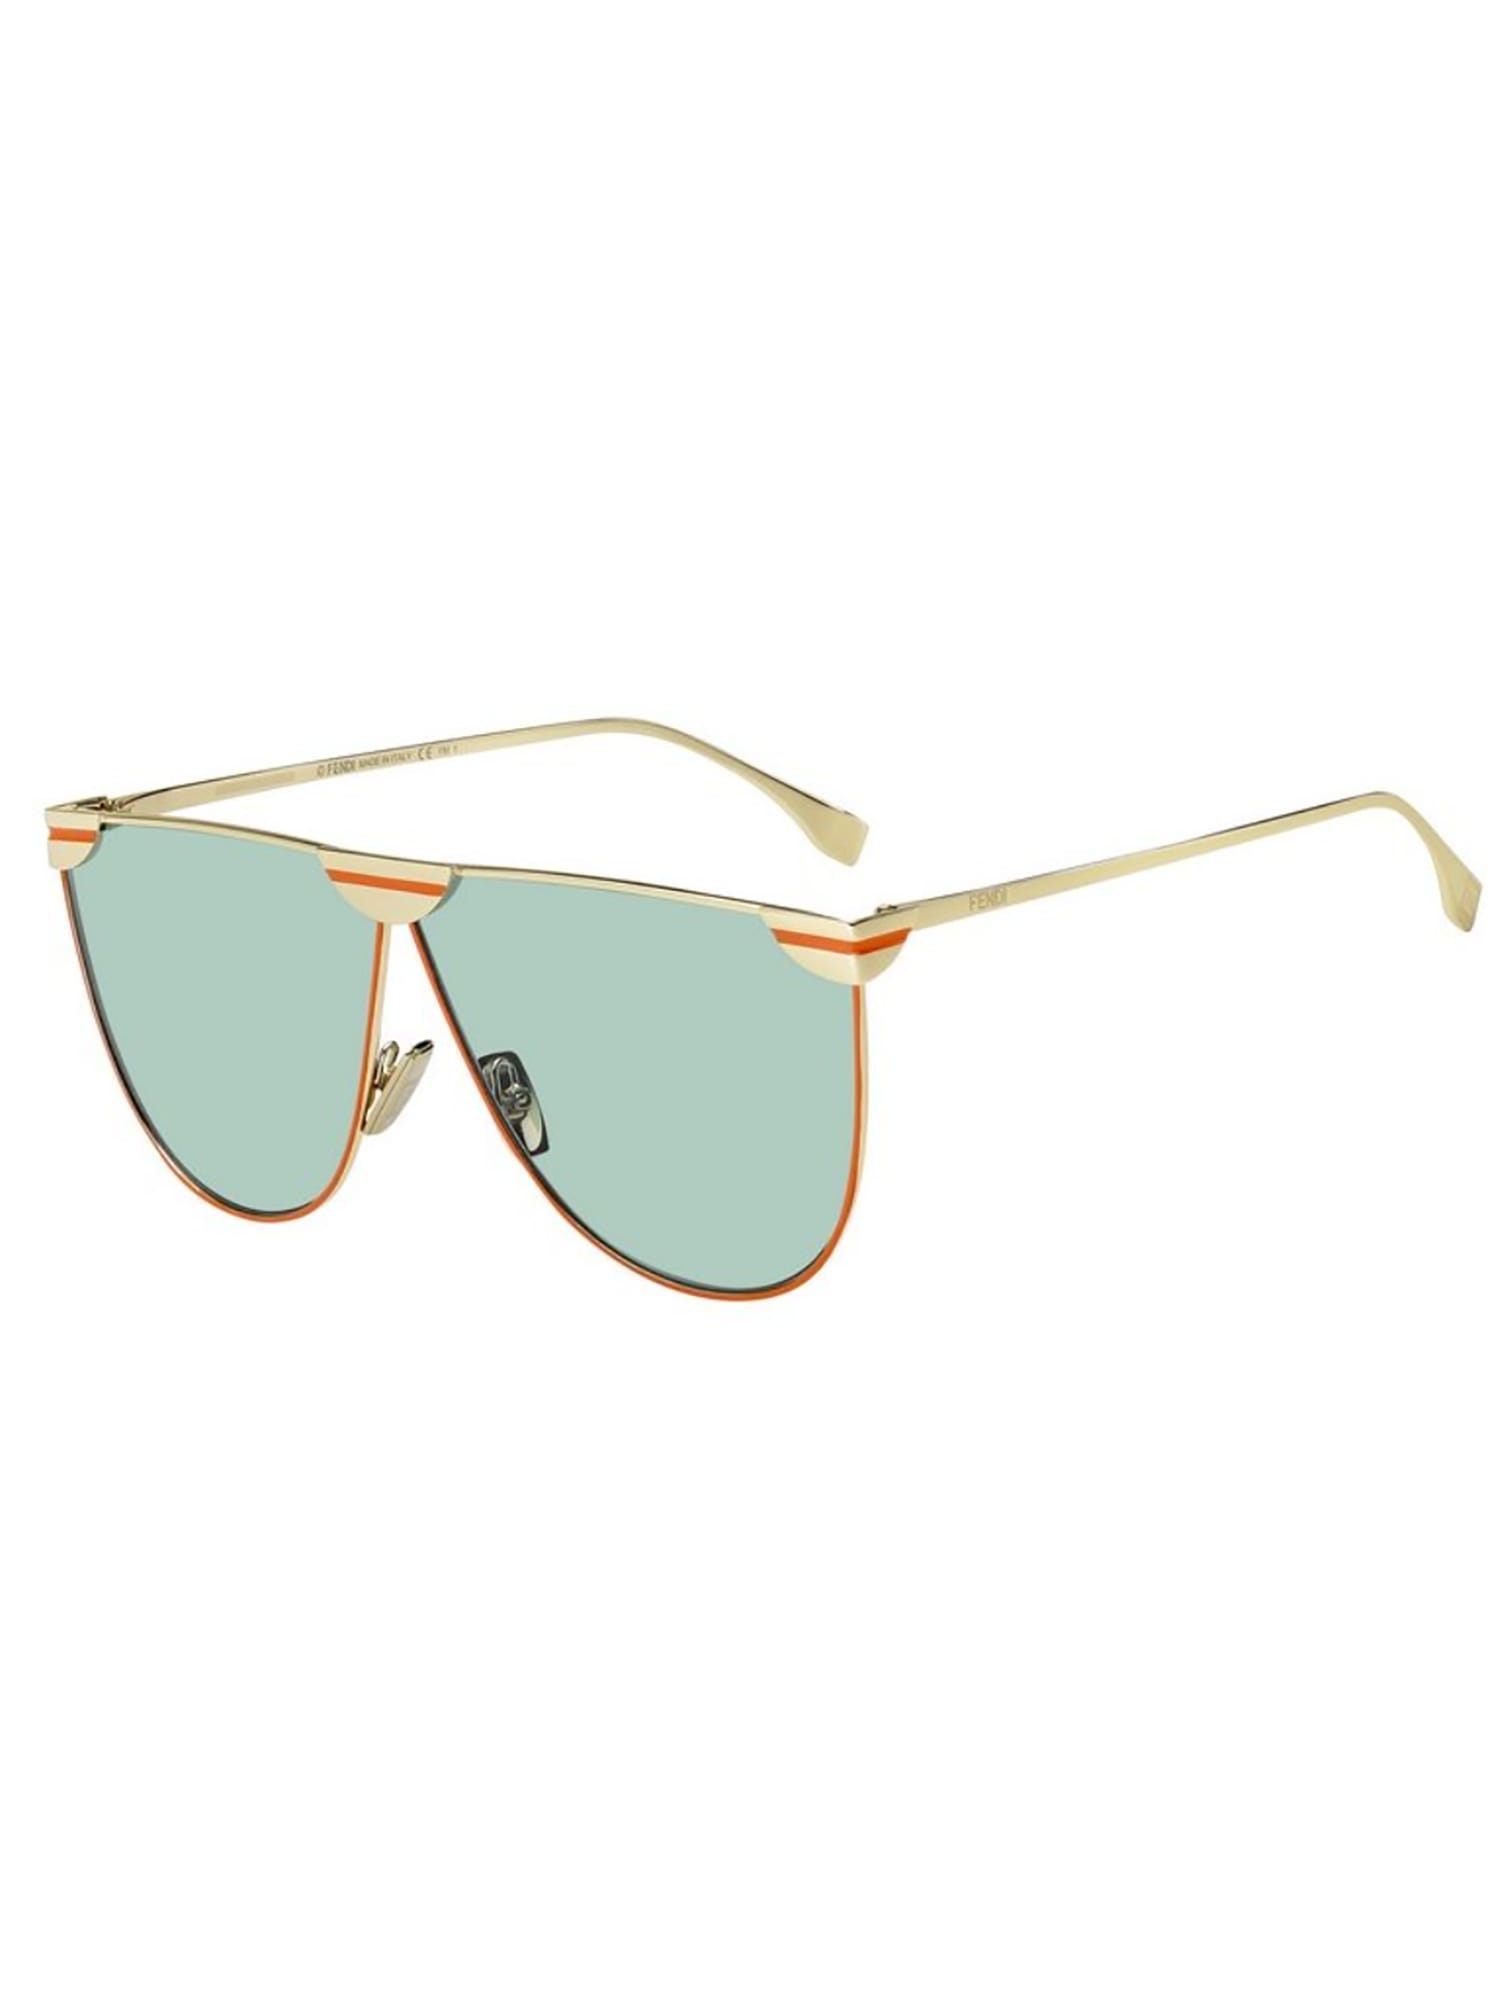 Fendi Ff 0467/s Sunglasses In Pef/qt Gold Green